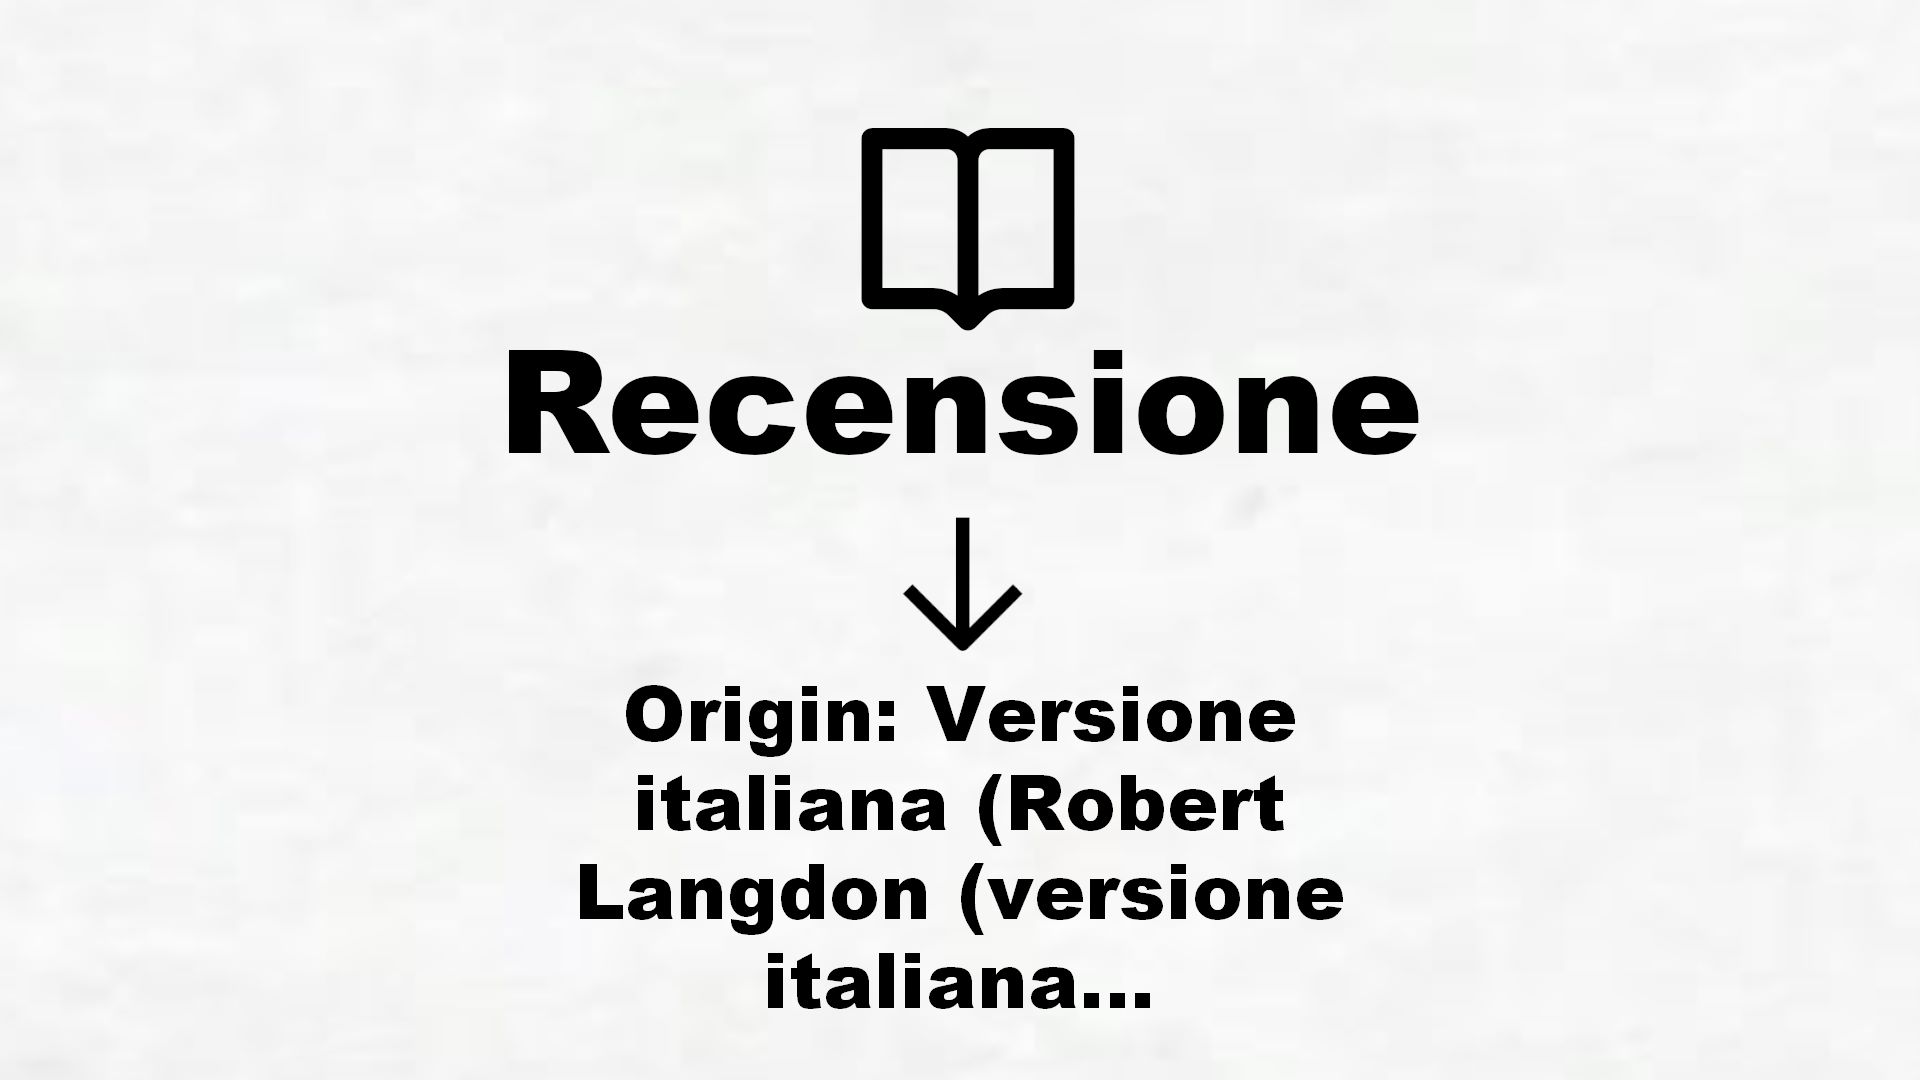 Origin: Versione italiana (Robert Langdon (versione italiana) Vol. 5) – Recensione Libro